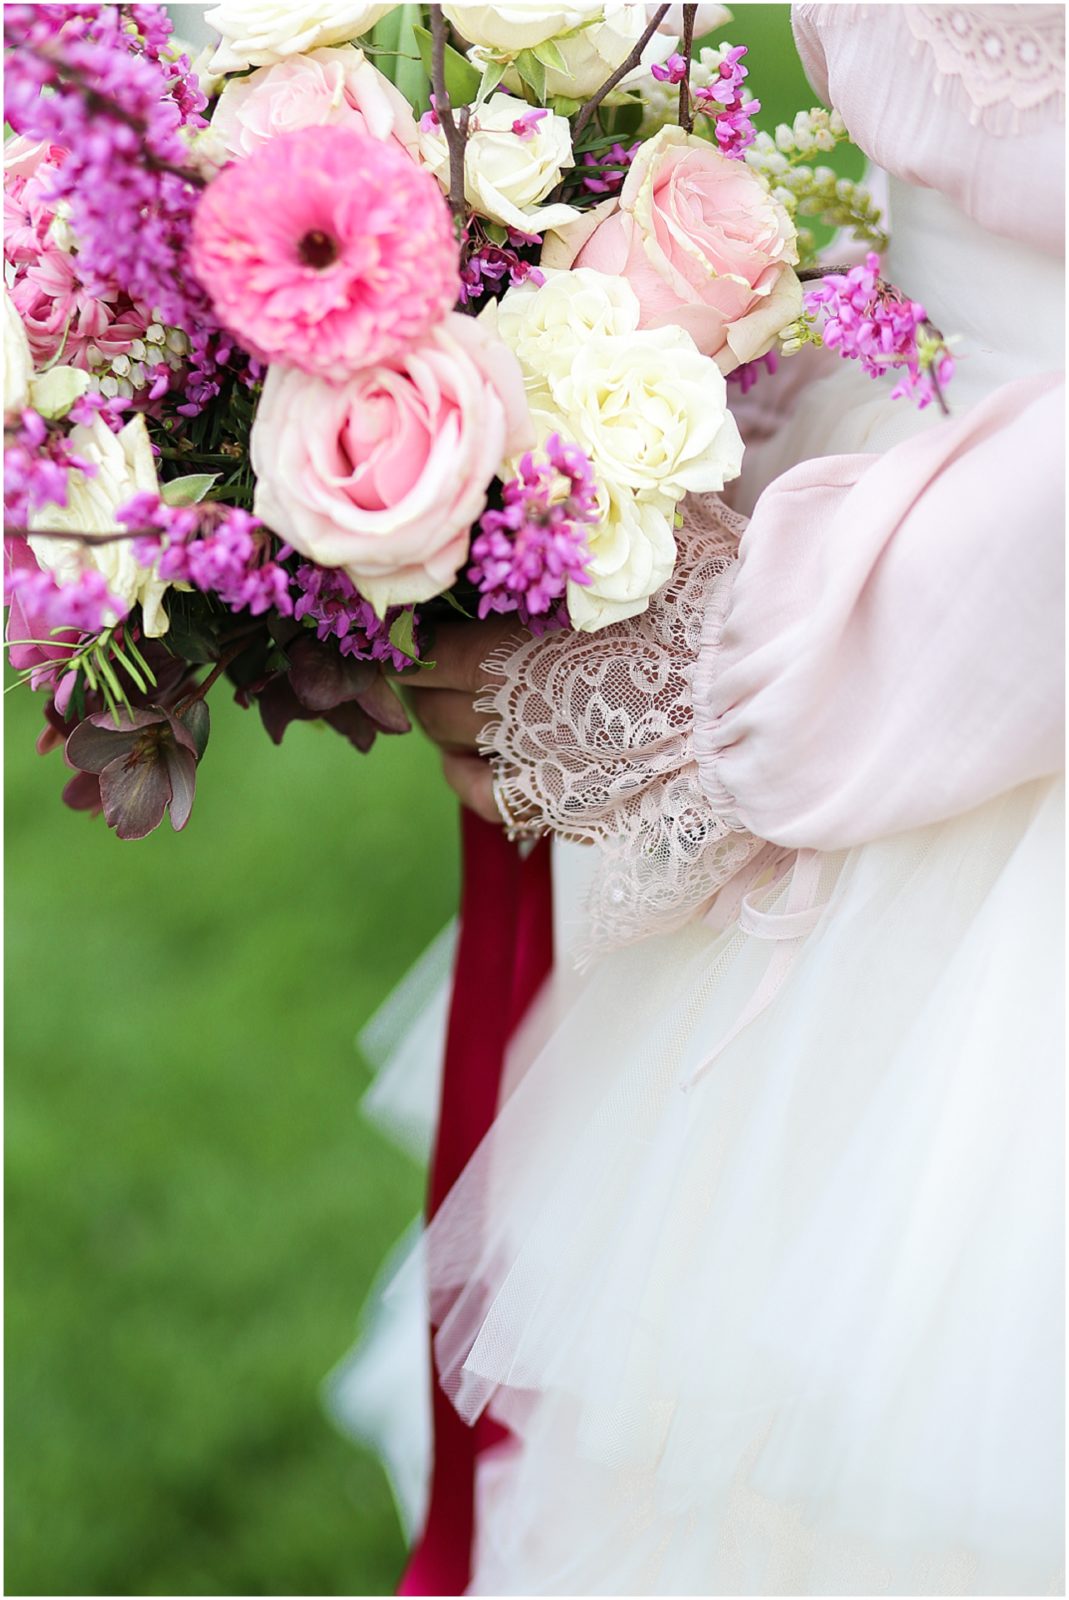 wedding bouquet - wedding florists in kansas city - pink and white wedding - romantic bouquet